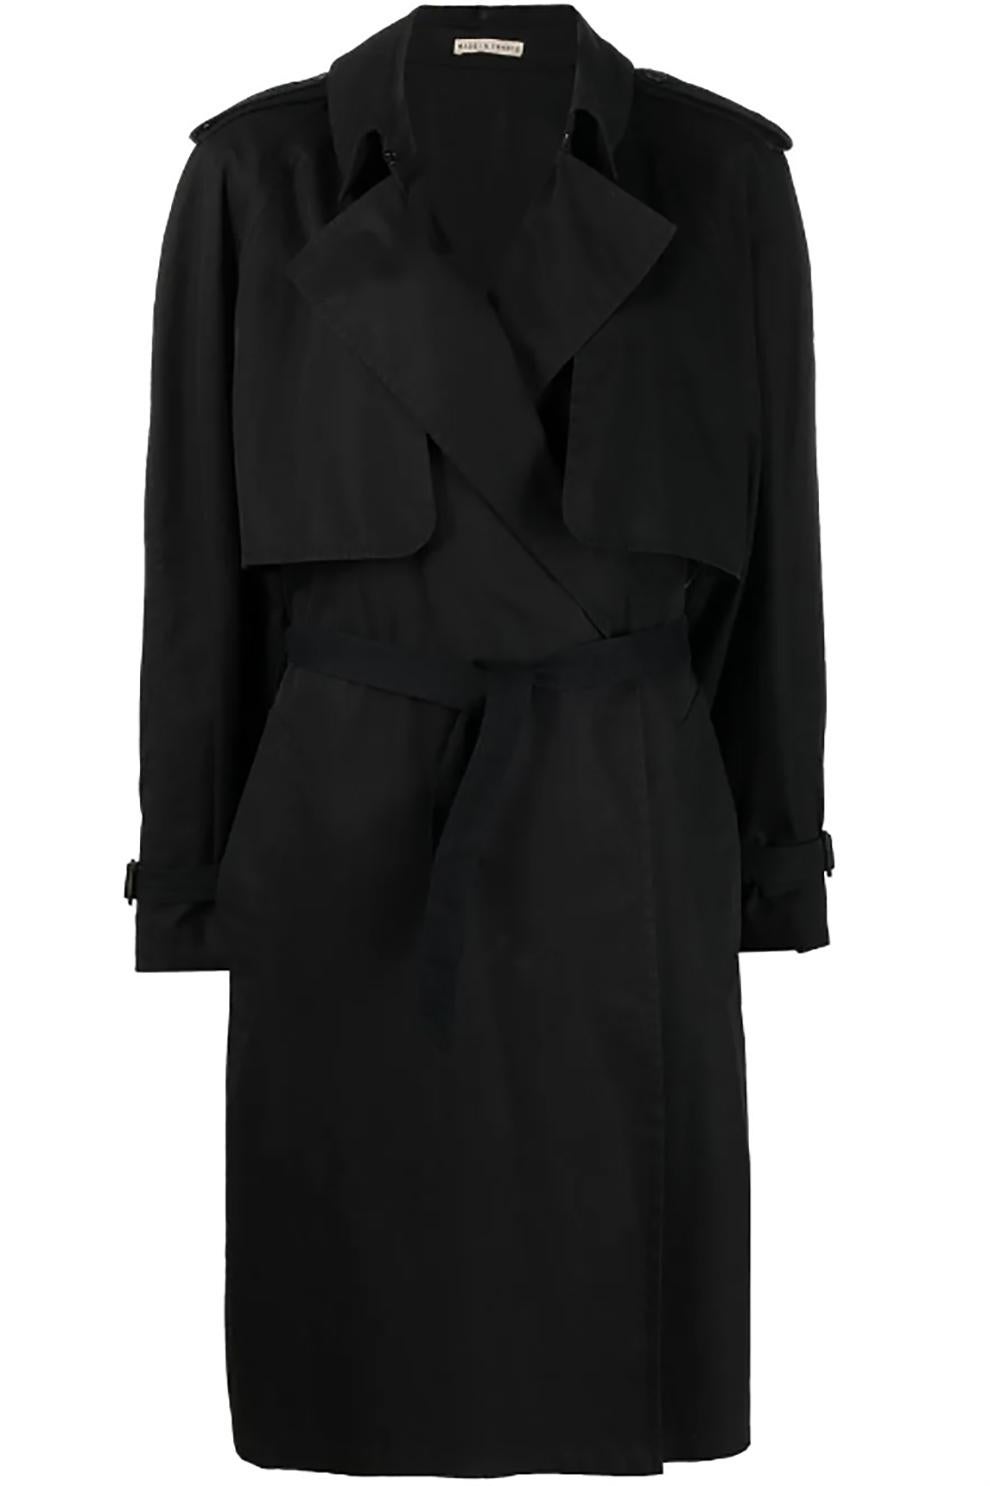 2003, Hermes by Margiela Black Trench Coat For Sale 3